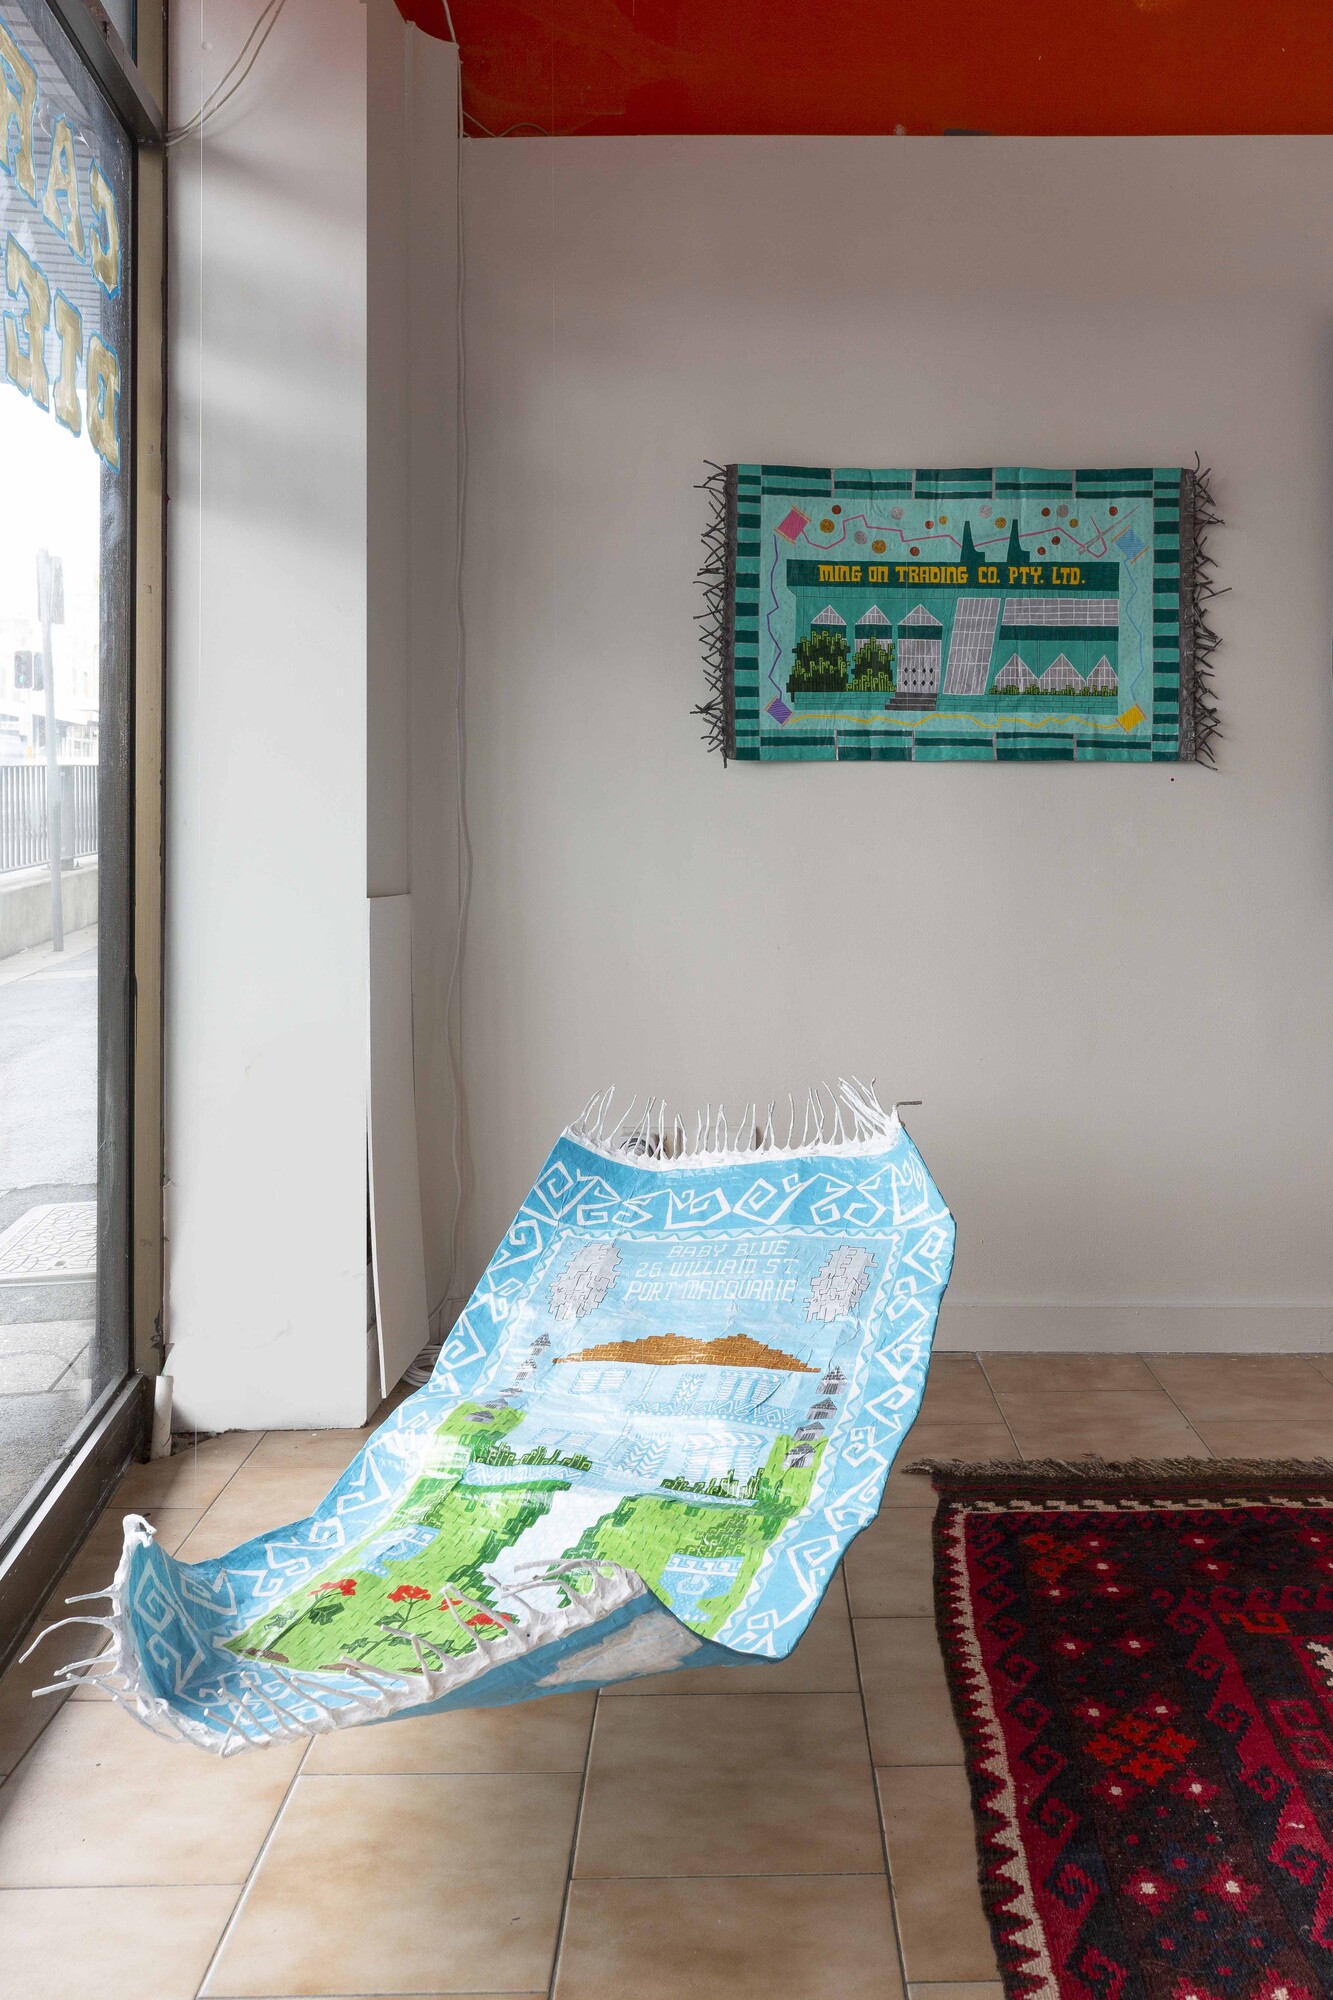 Installation view of Raquel Caballero, <em>Carpet Diem</em> at Our Neon Foe. Image courtesy of the artist. Photo: Jek Maurer.